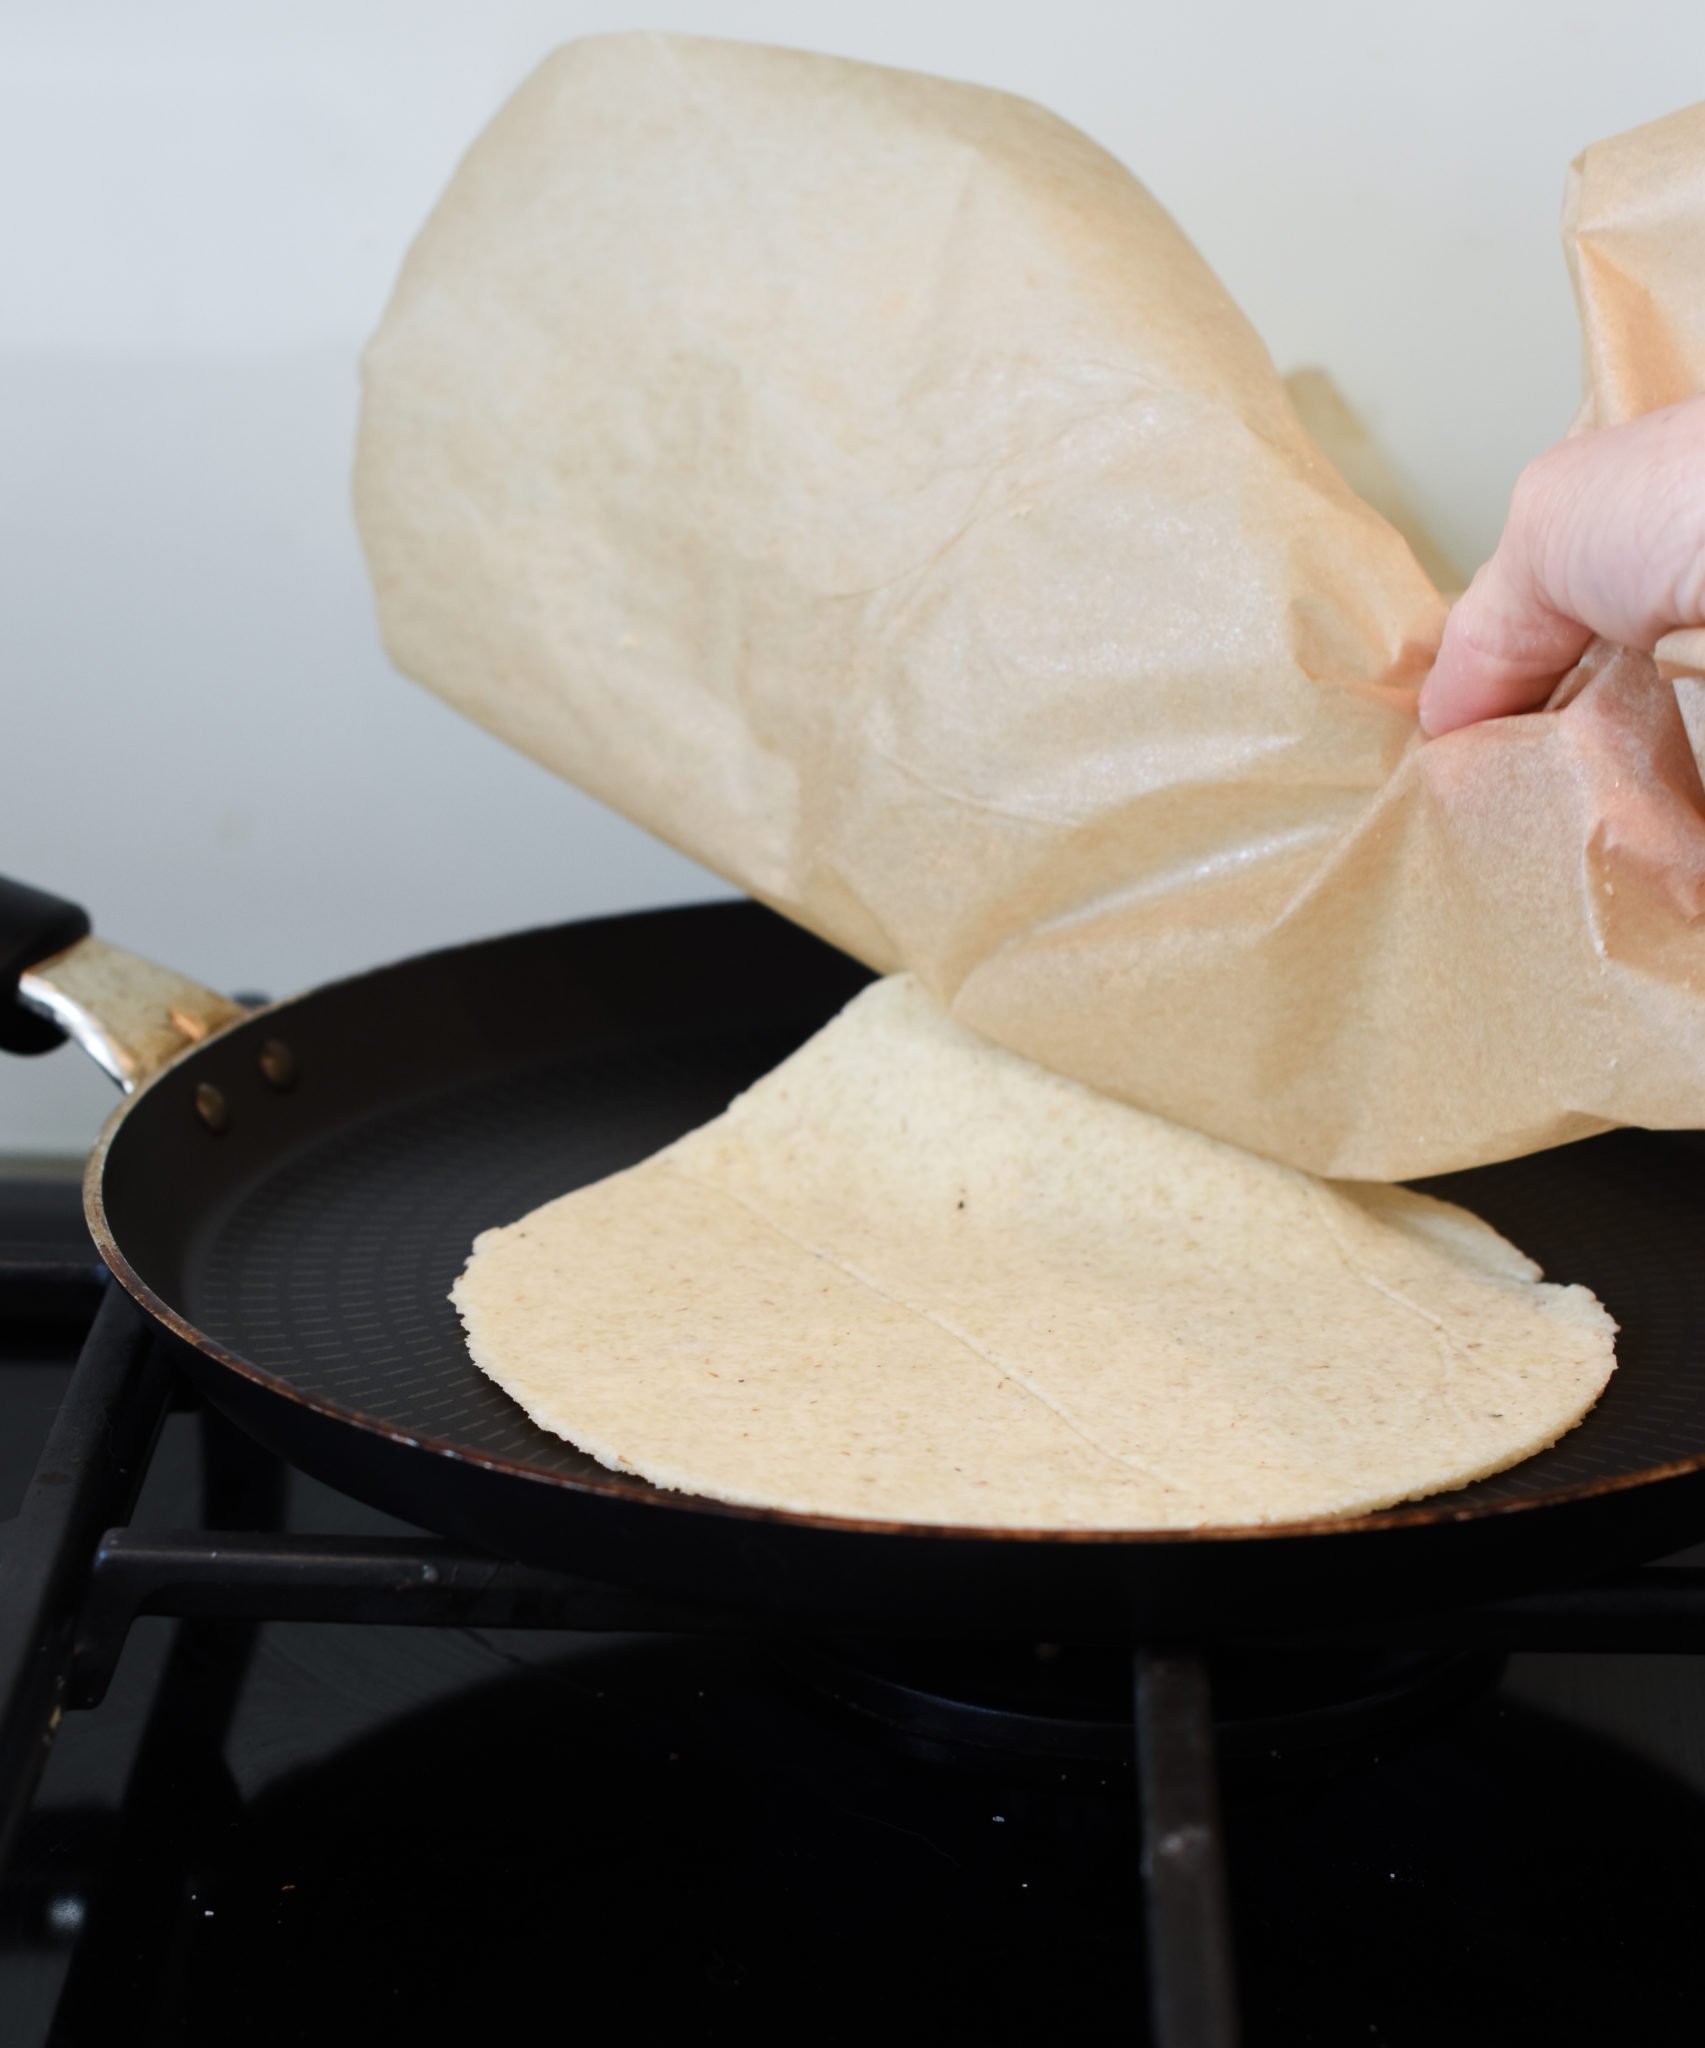 How to cook keto tortillas